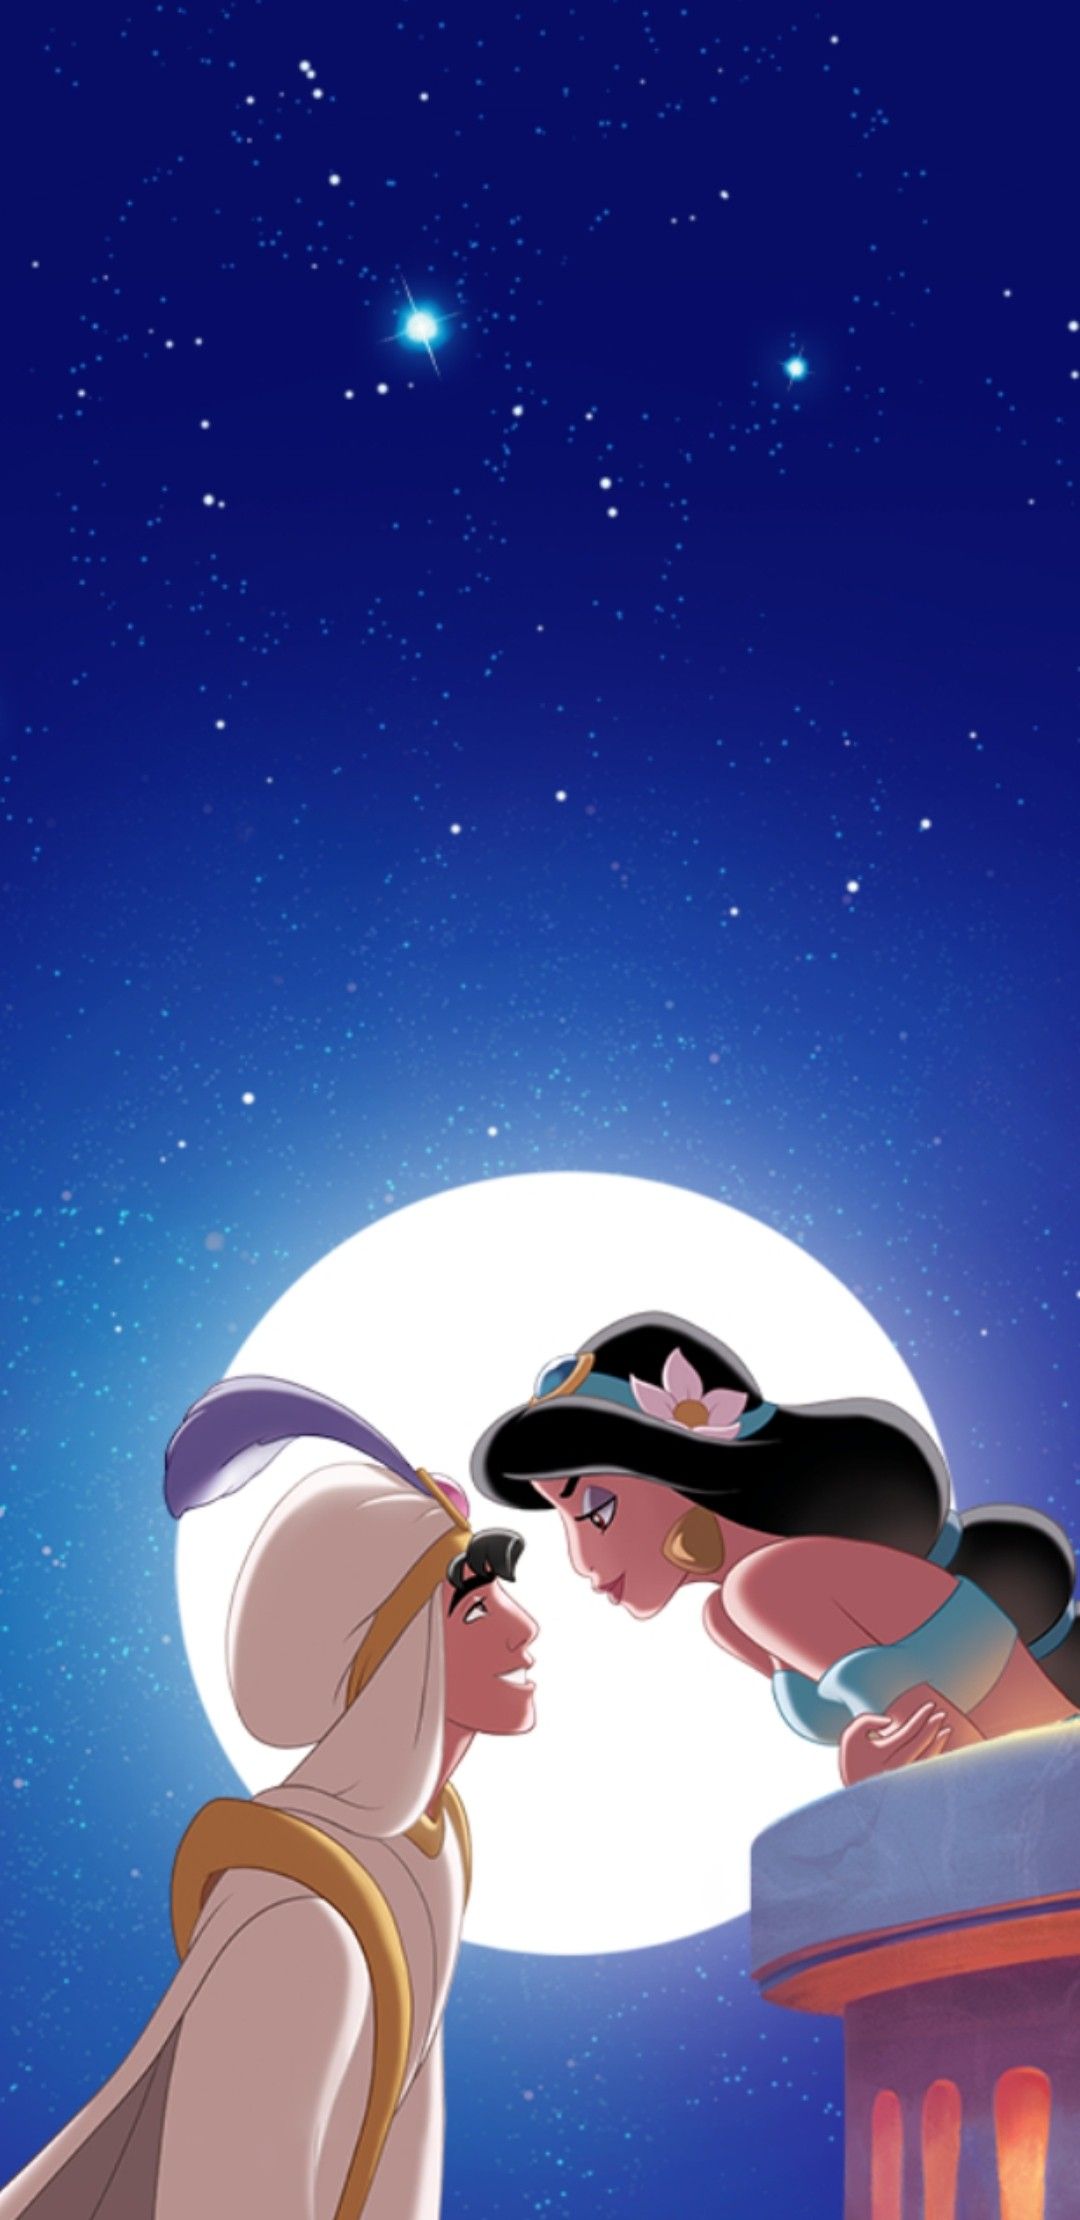 Aladdin & Jasmine. Cute disney wallpaper, Aladdin wallpaper, Disney background